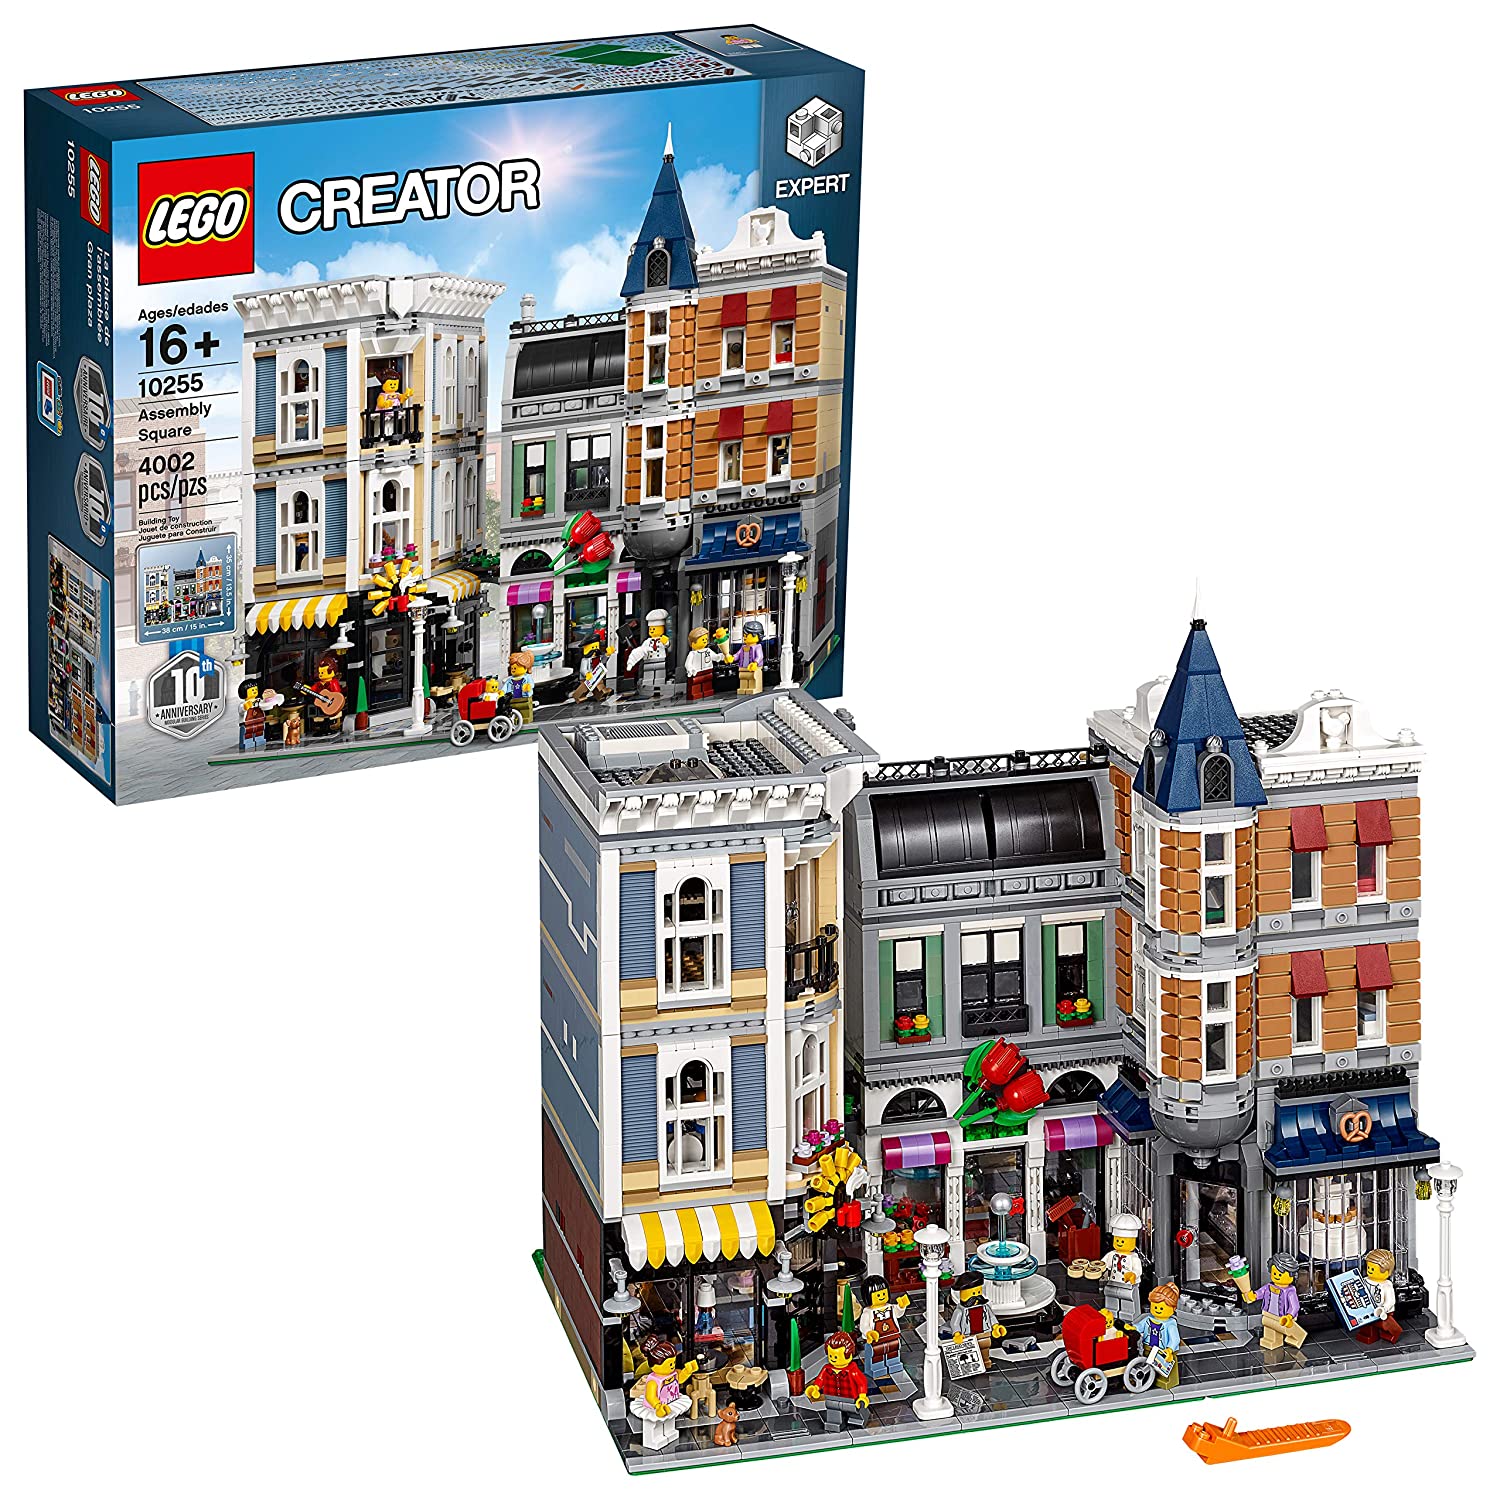 9 Best LEGO Modular Buildings Set 2022 - Buying Guide 1